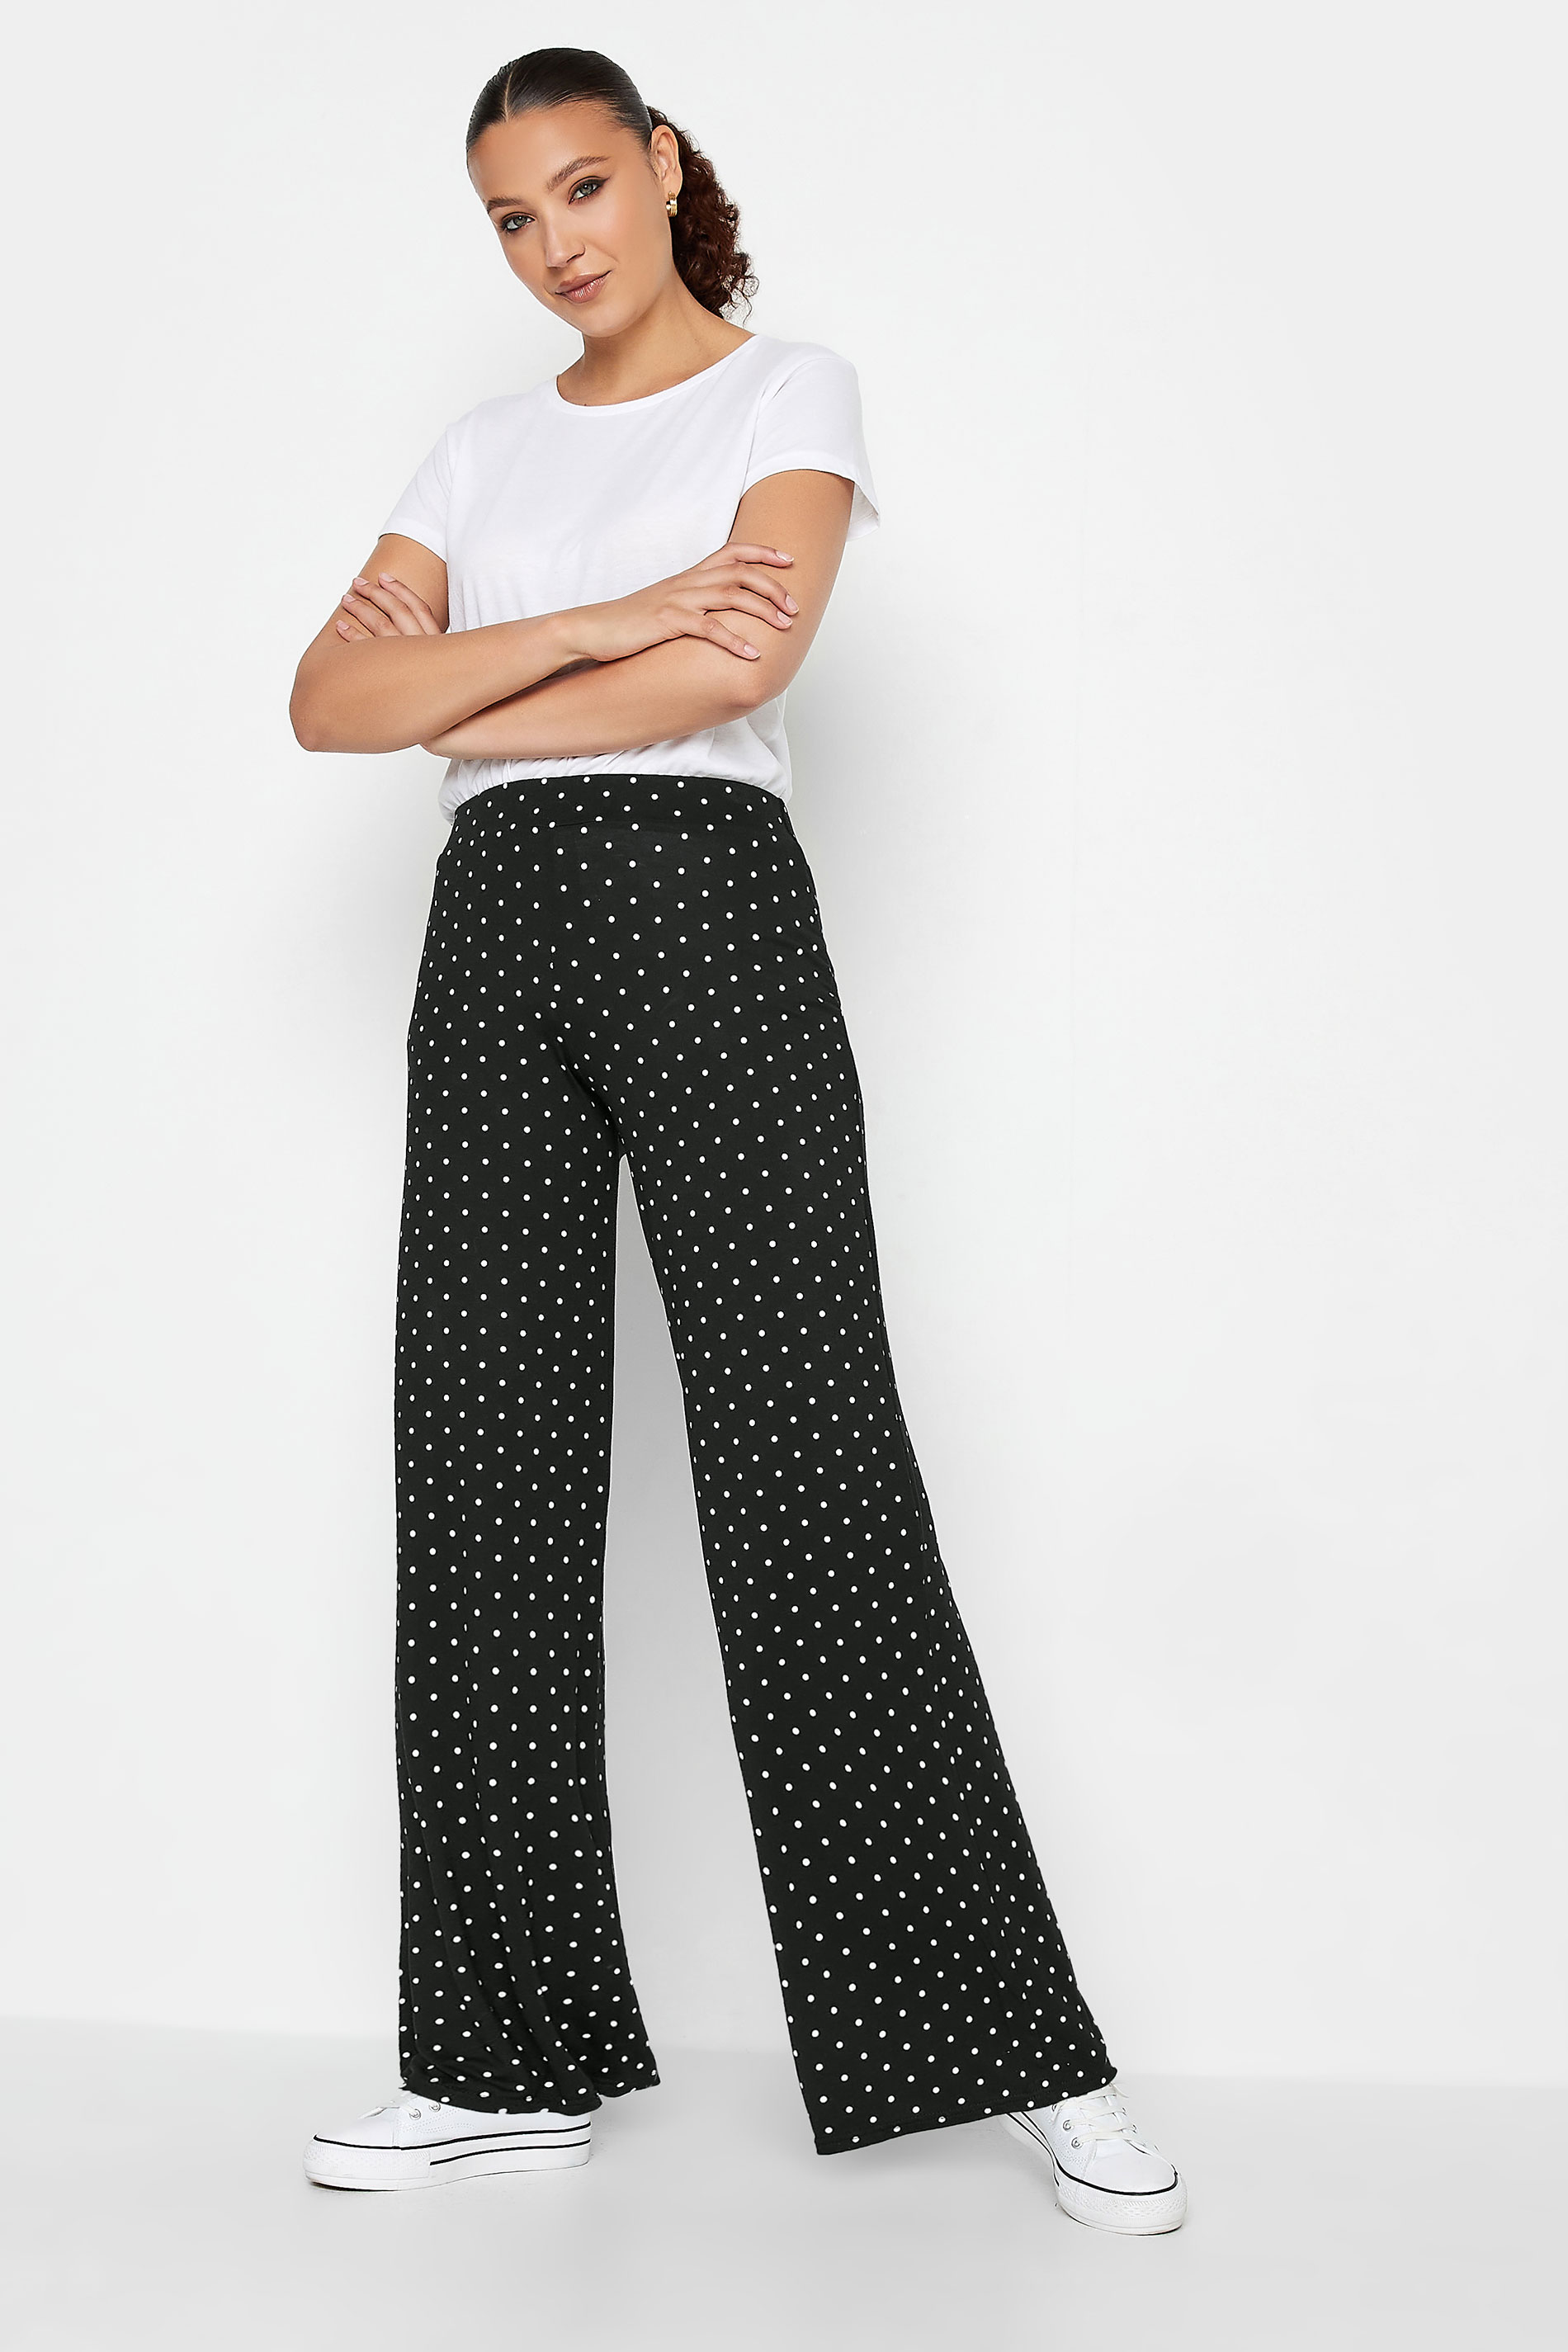 LTS Tall Black Polka Dot Print Wide Leg Trousers | Long Tall Sally 2